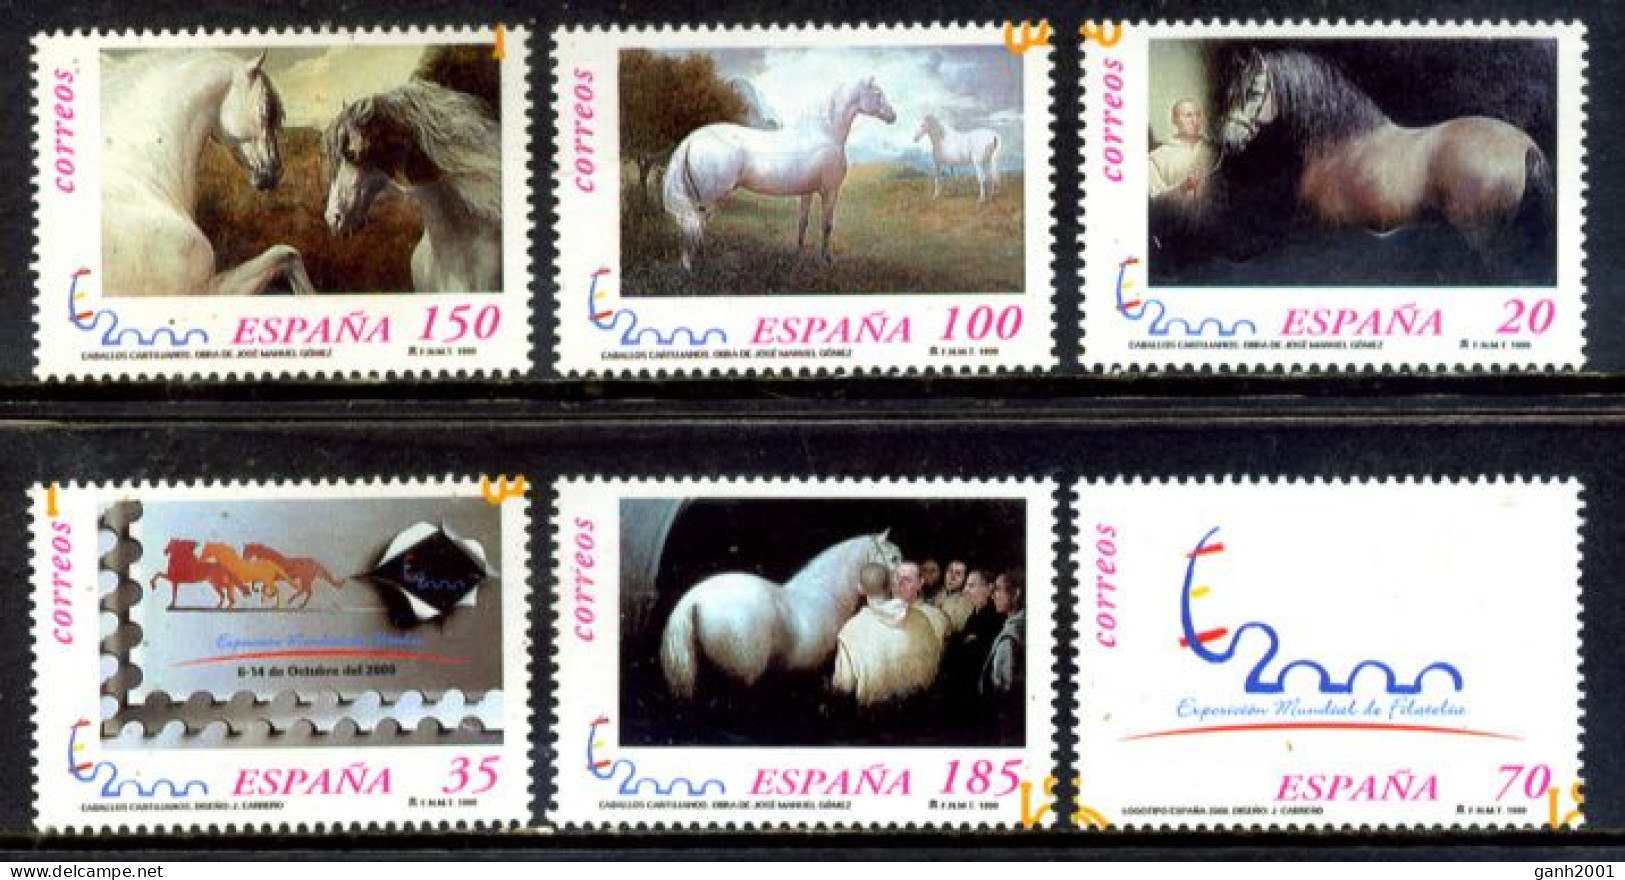 Spain 1999 España / Mammals Horses MNH Caballos Säugetiere Chevaux / Hb19  34-6 - Horses